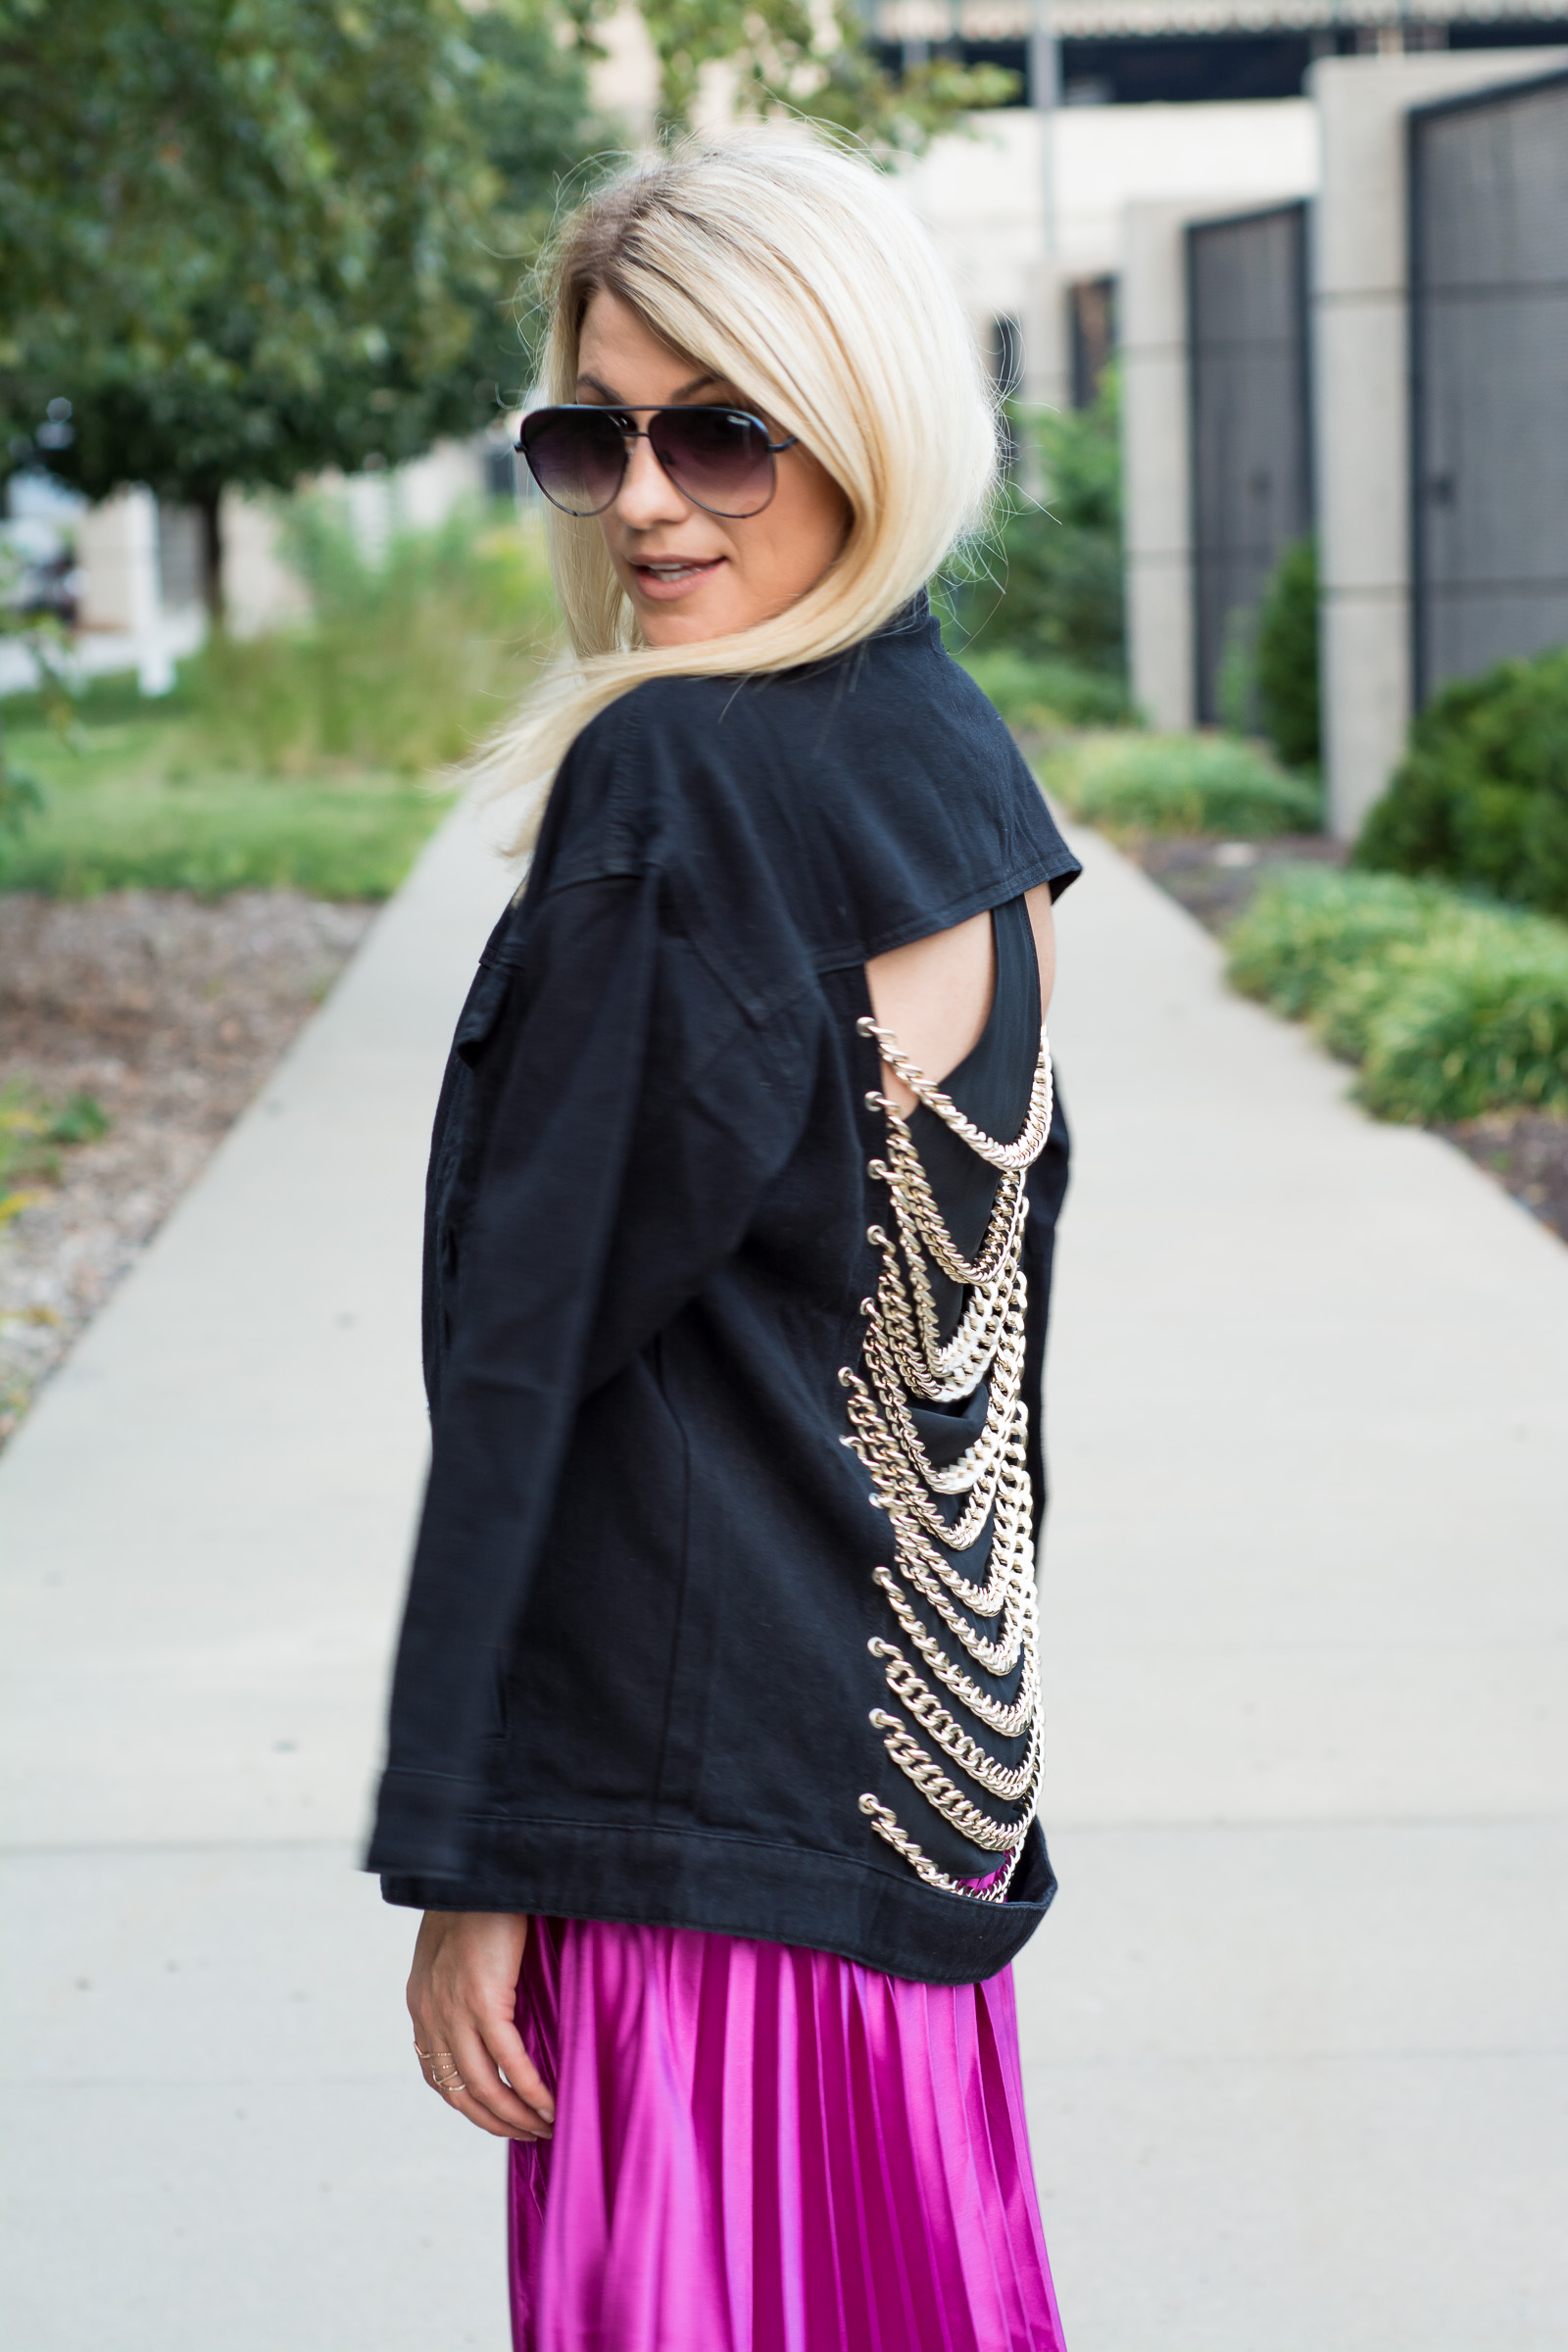 Fuchsia Pleated Midi Skirt + Black Denim Chain Jacket. | Ashley from LSR